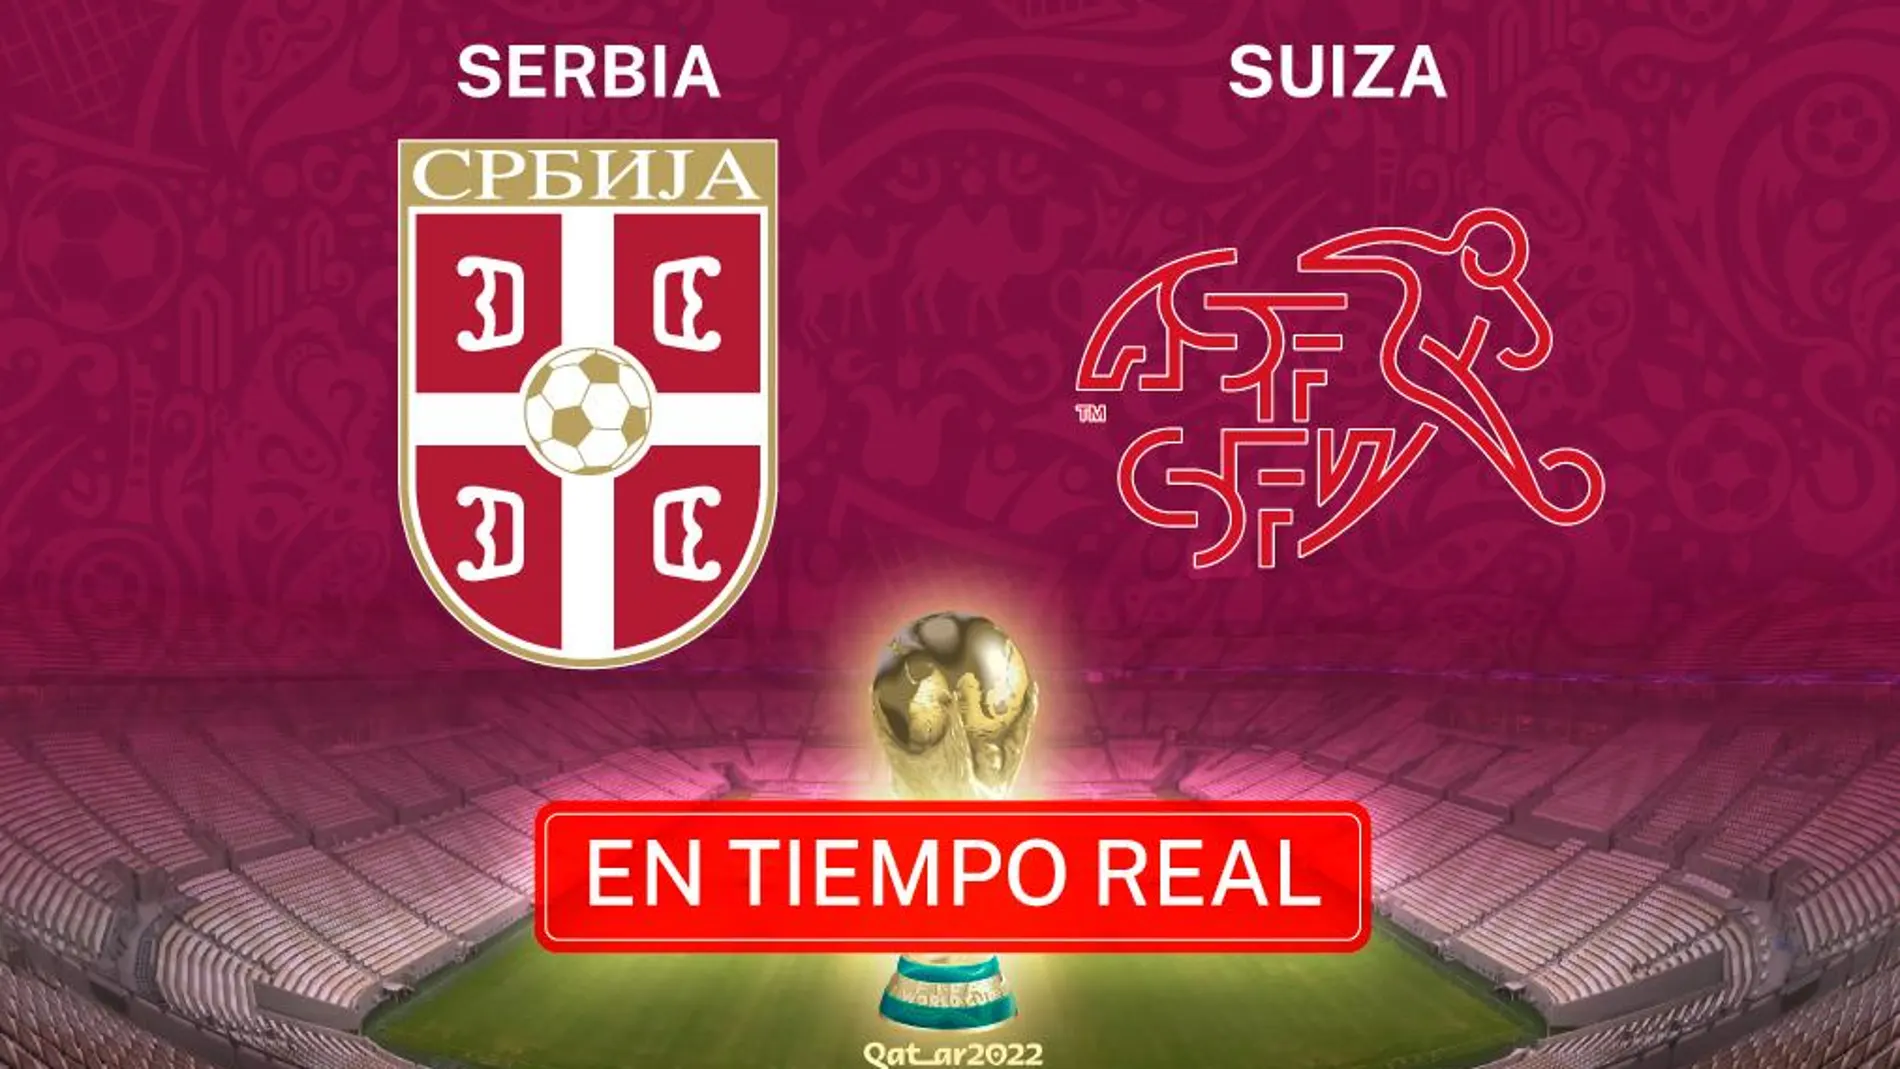 Qatar 2022 Serbia - Suiza